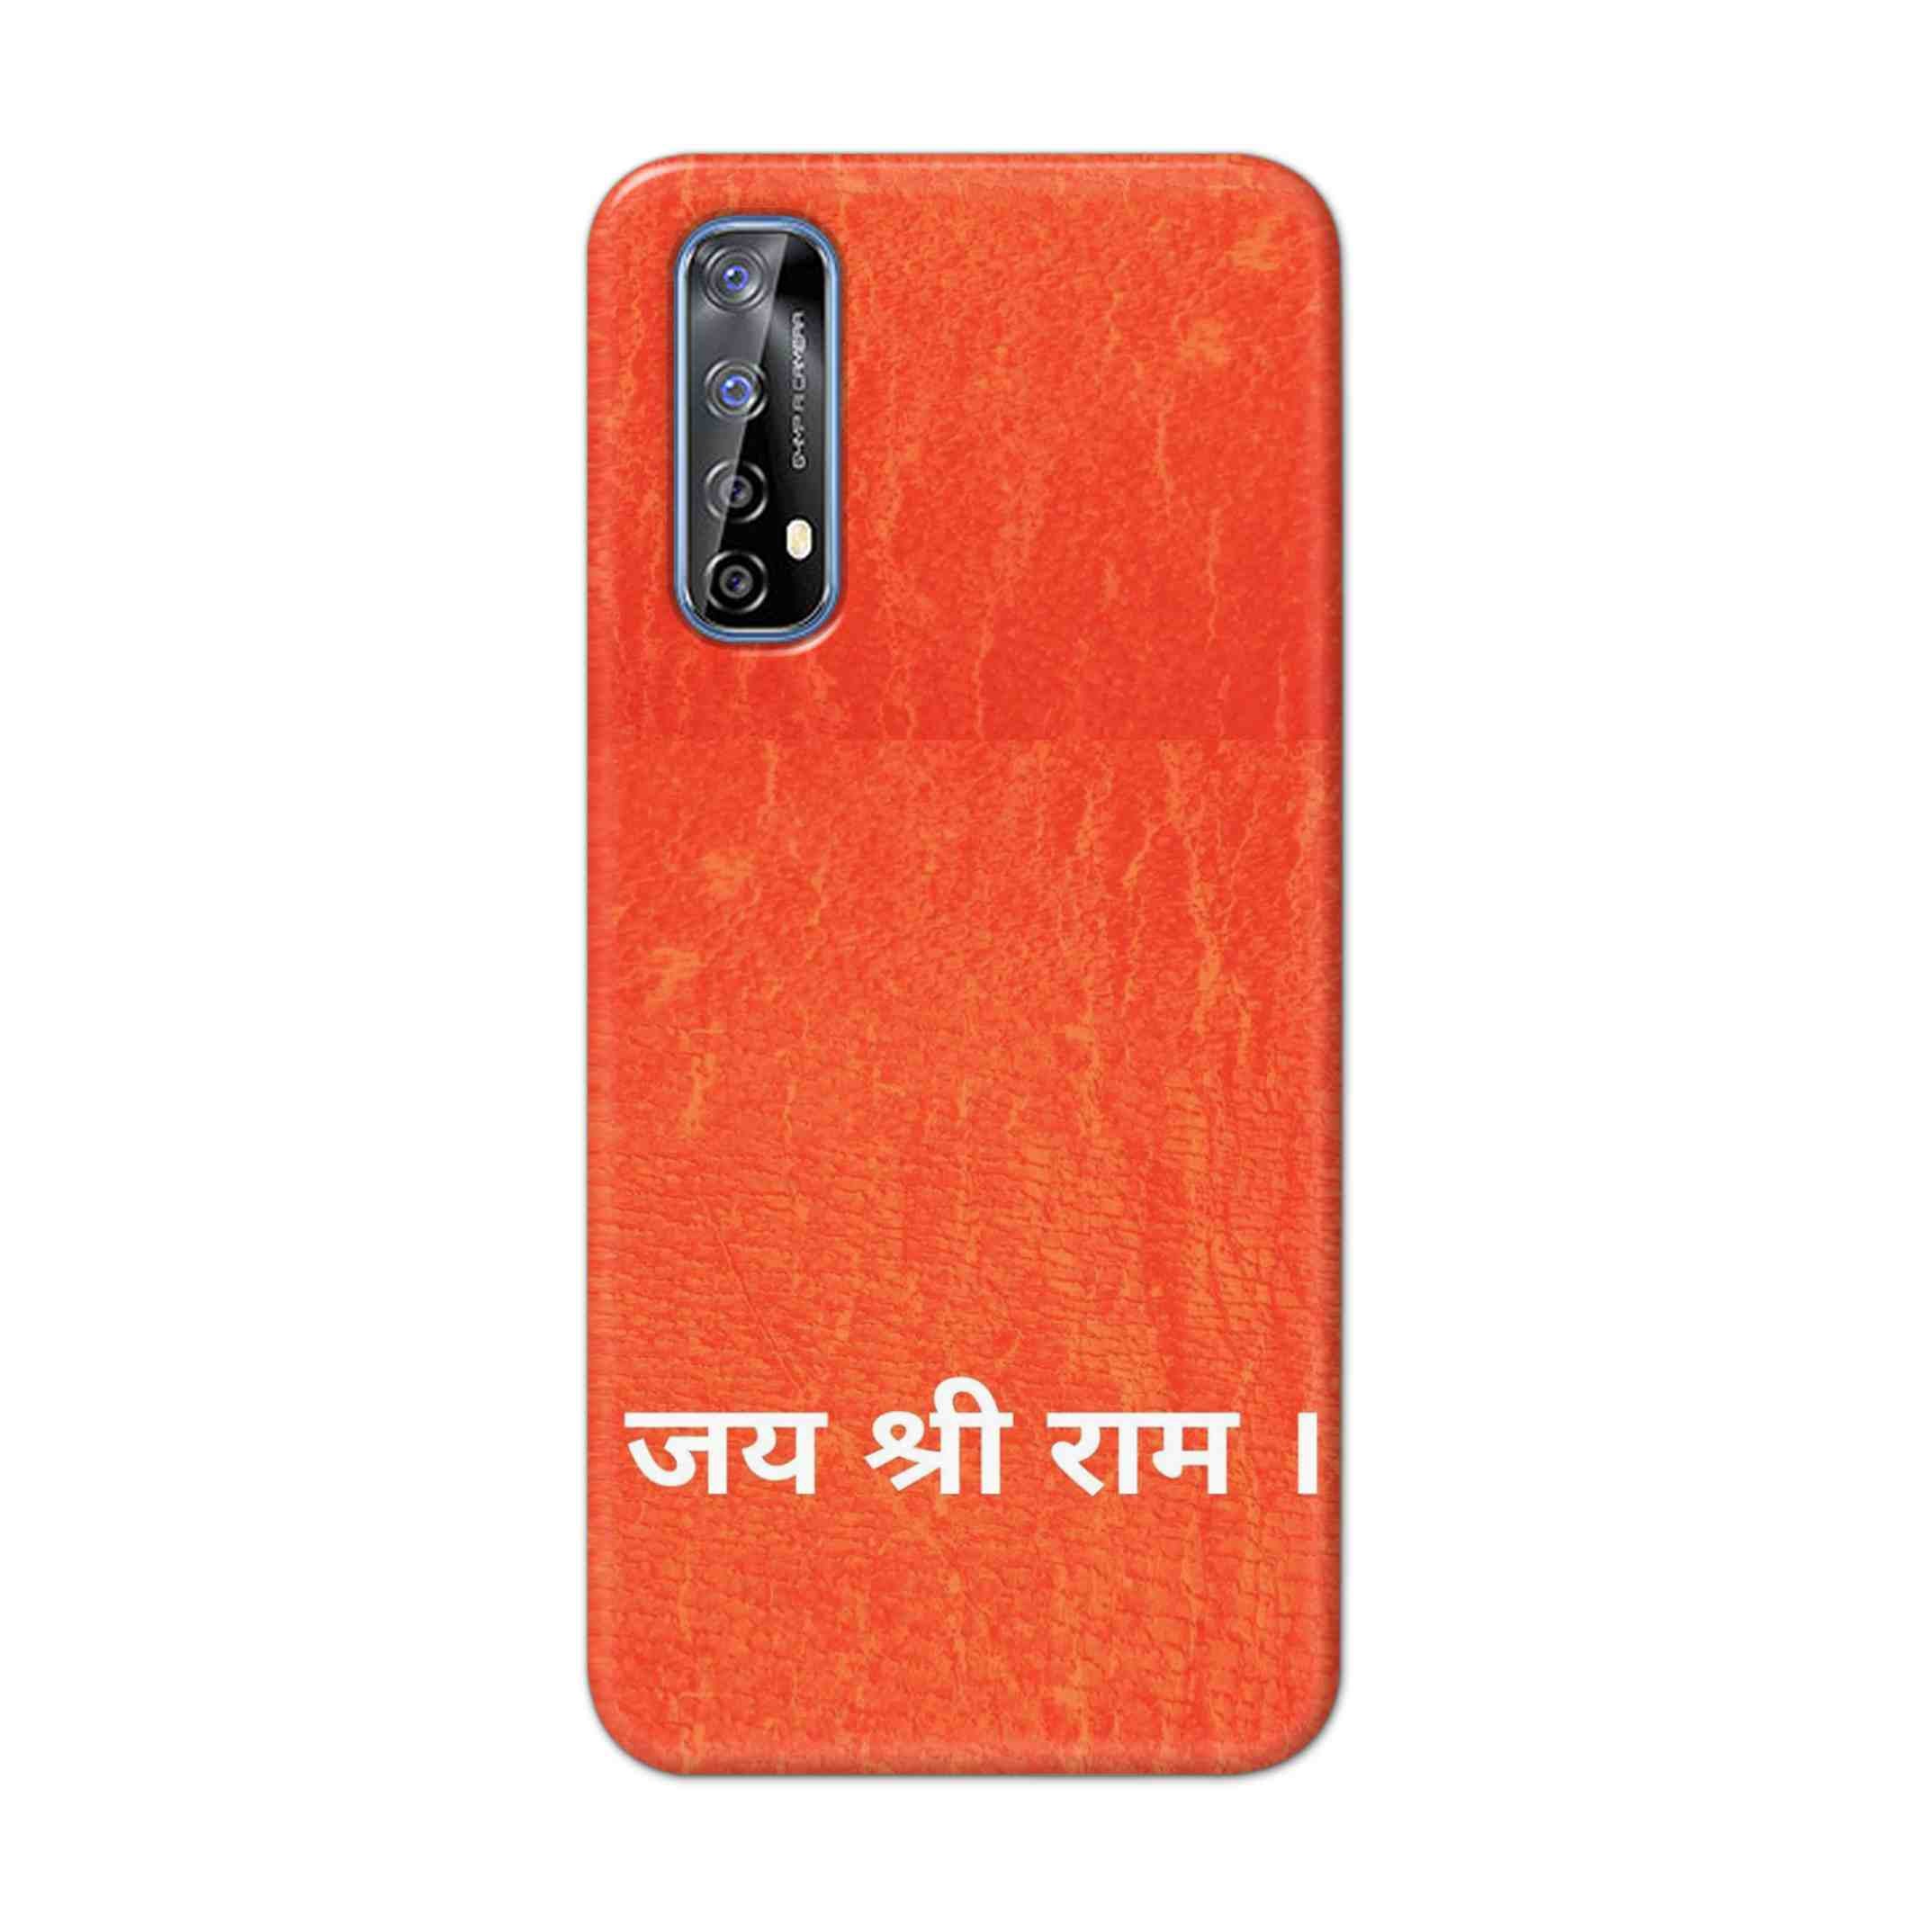 Buy Jai Shree Ram Hard Back Mobile Phone Case Cover For Realme 7 Online